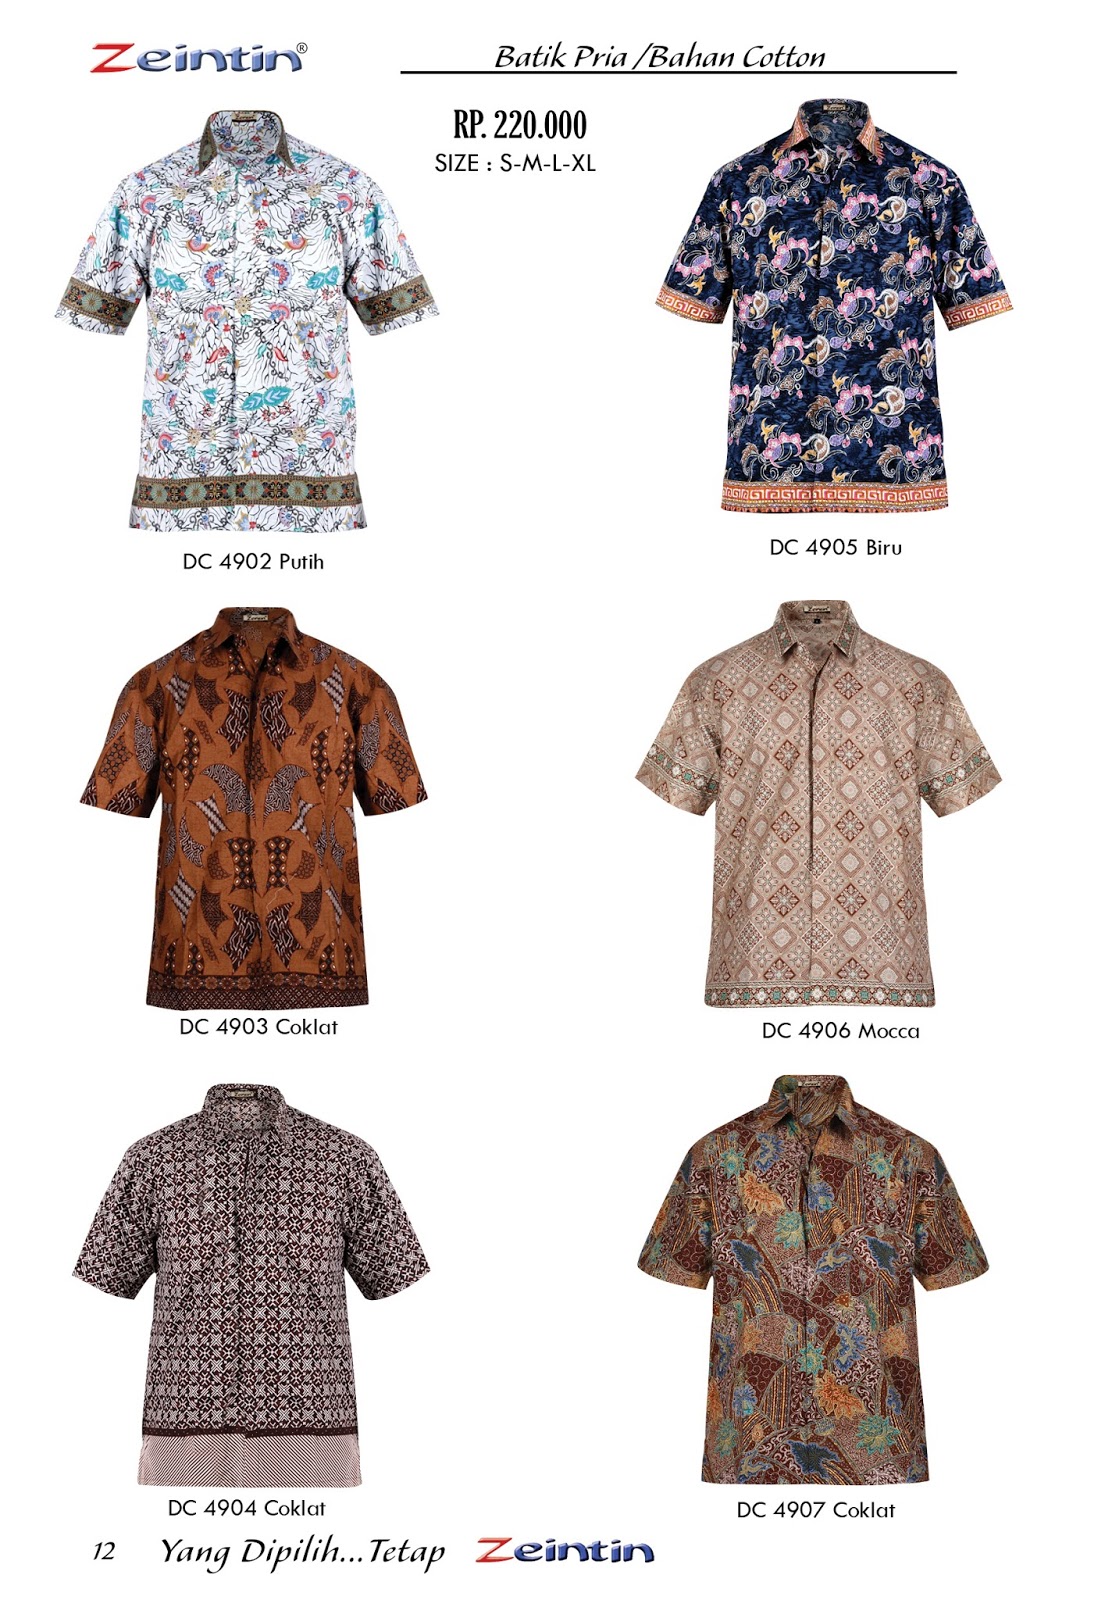 Baju Batik Pria iBahani iCottoni Online Mall Pakaian iIndonesiai